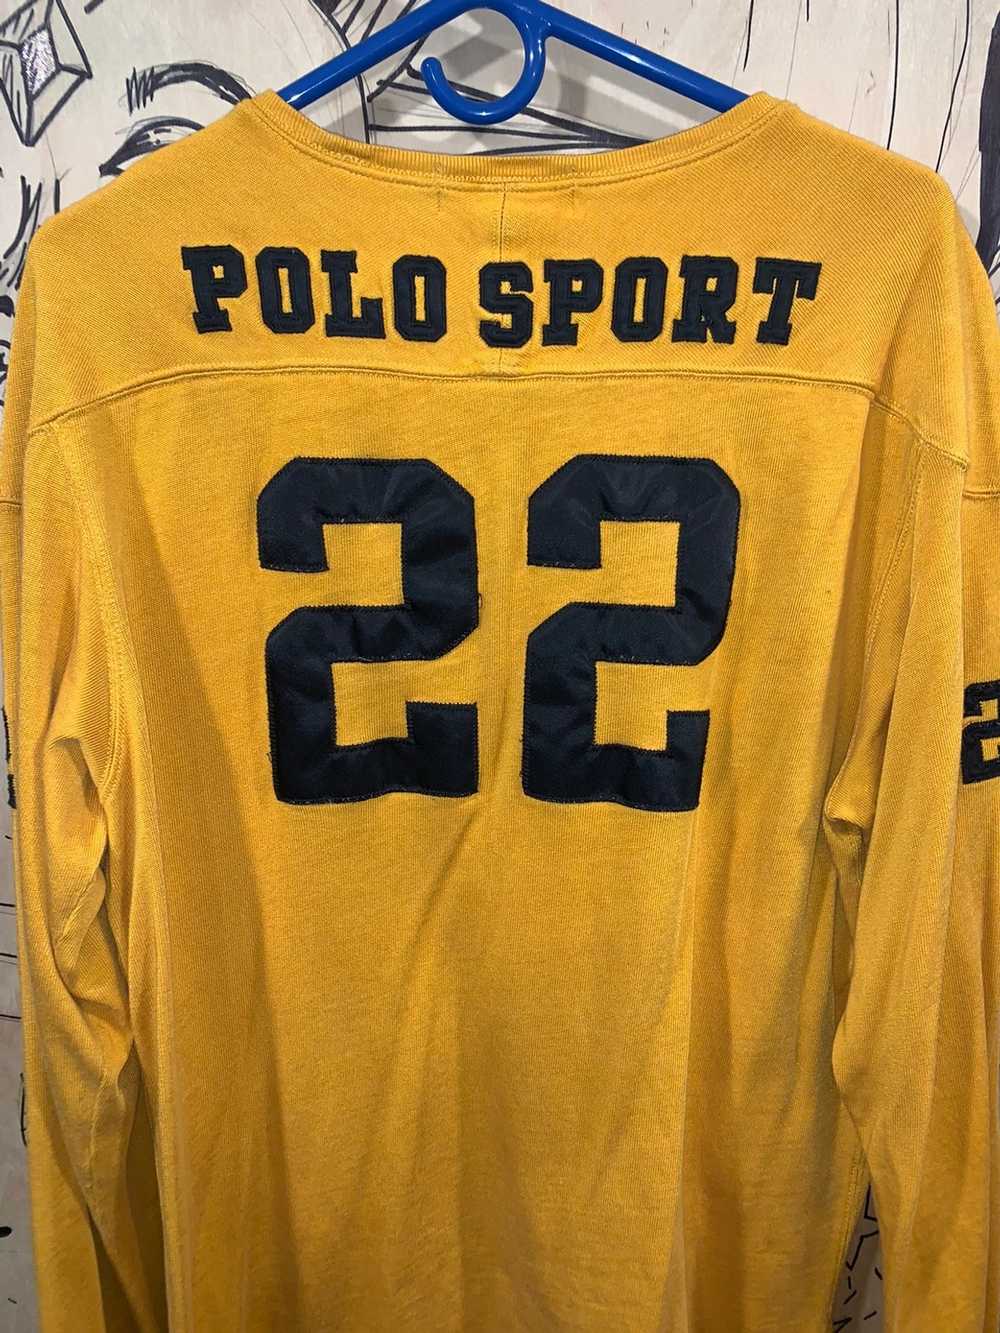 Polo Ralph Lauren Polo sport jersey - image 2